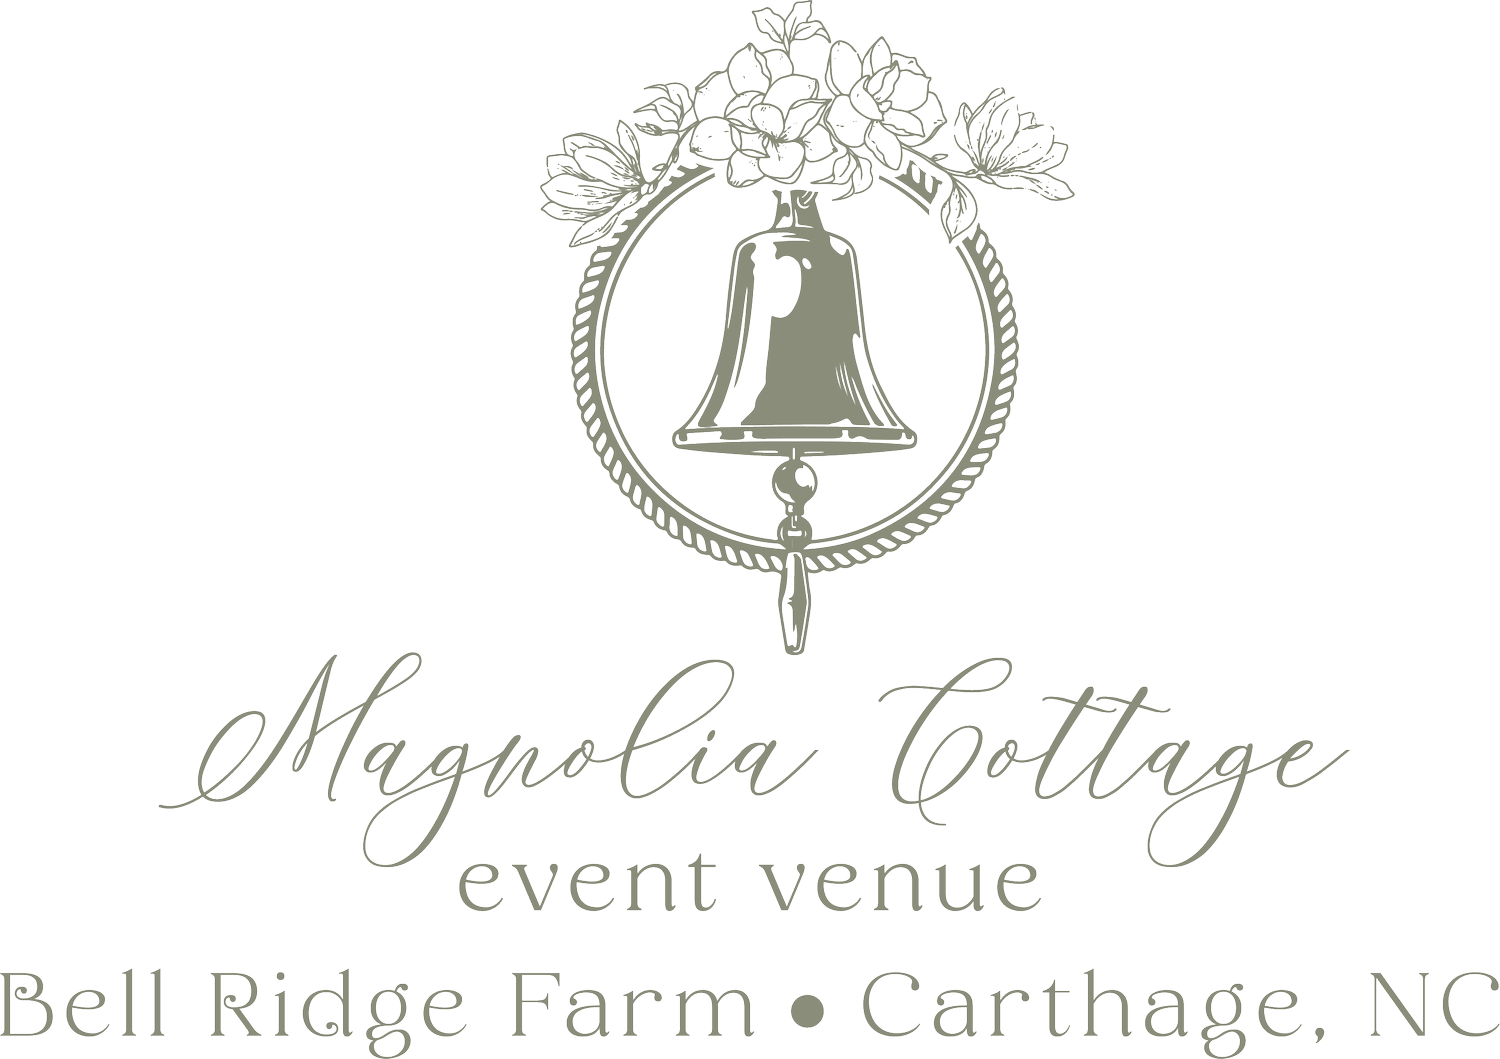 Magnolia Cottage events and venue at Bell Ridge Farm 